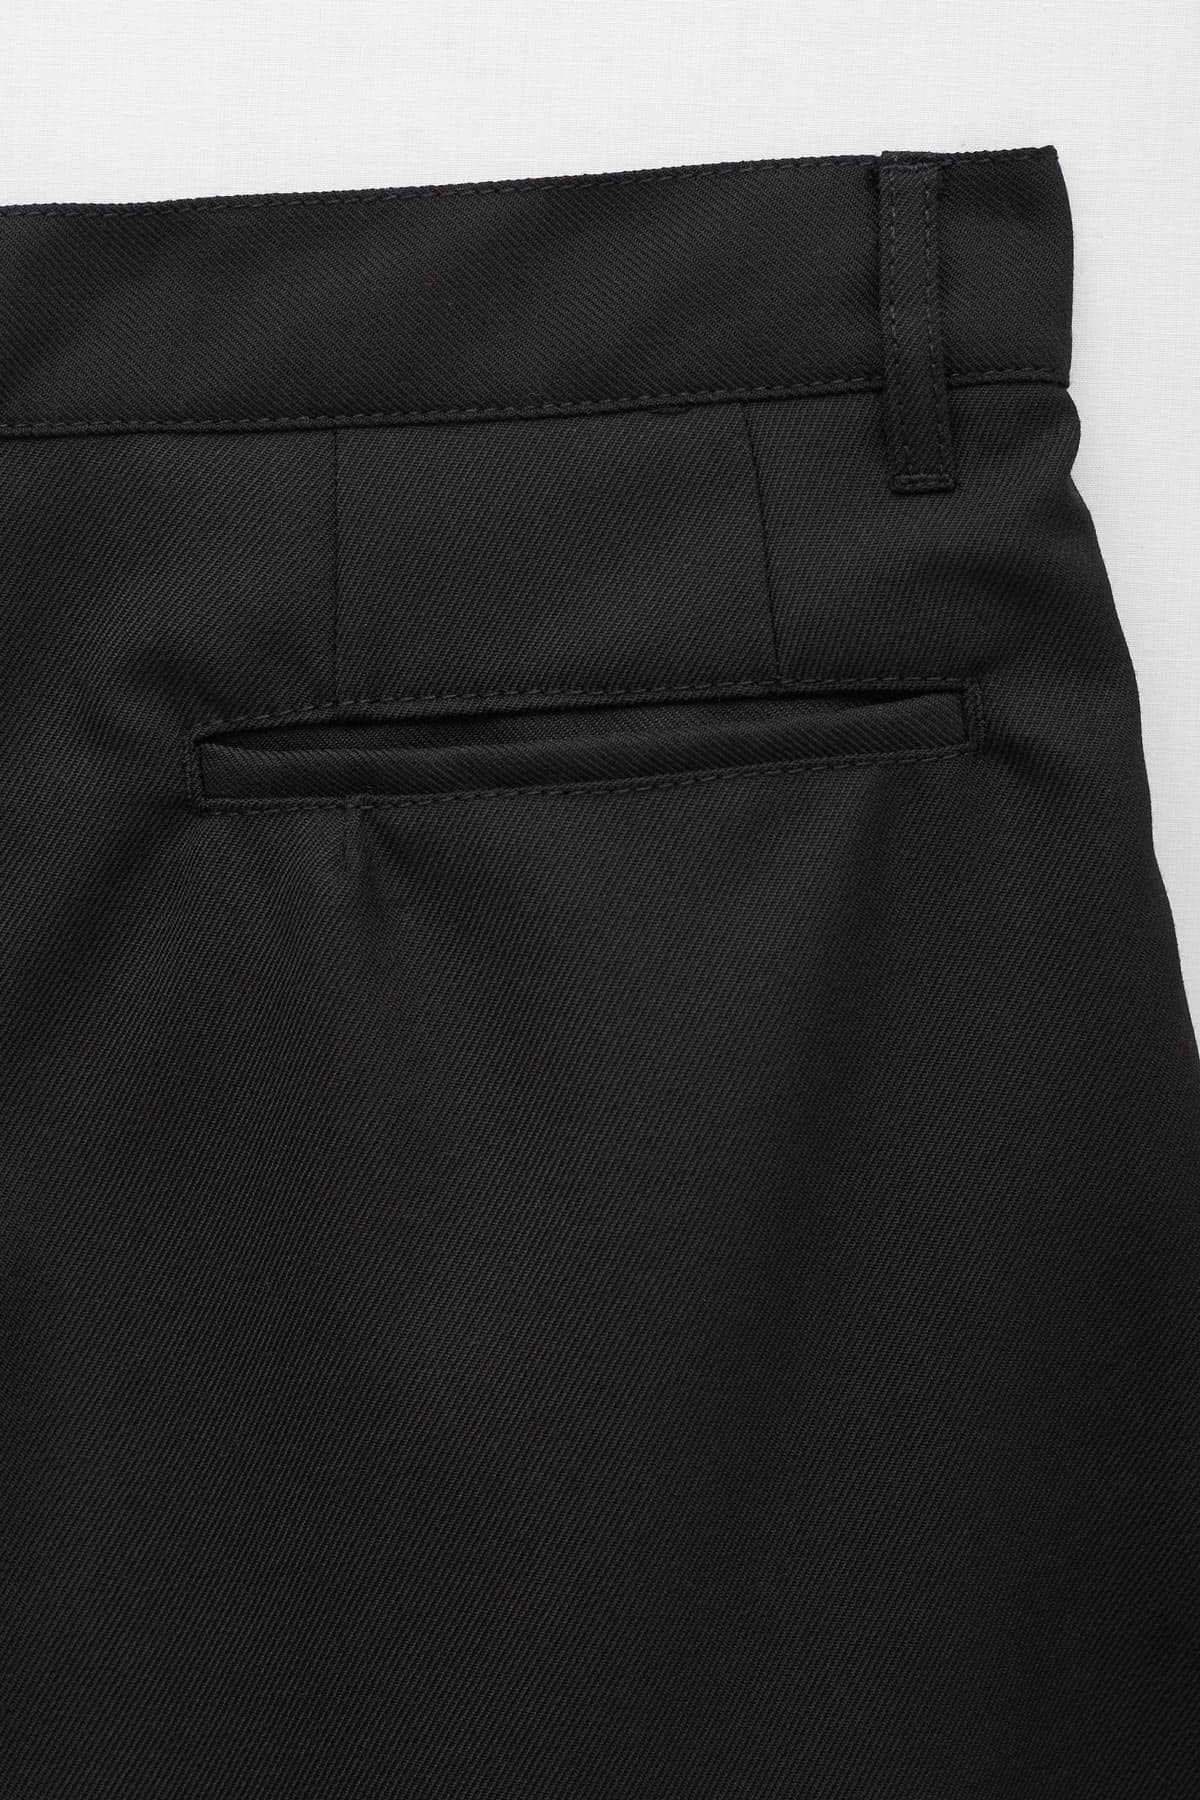 Slim Fit Cropped suit trousers - Black - Men | H&M IN